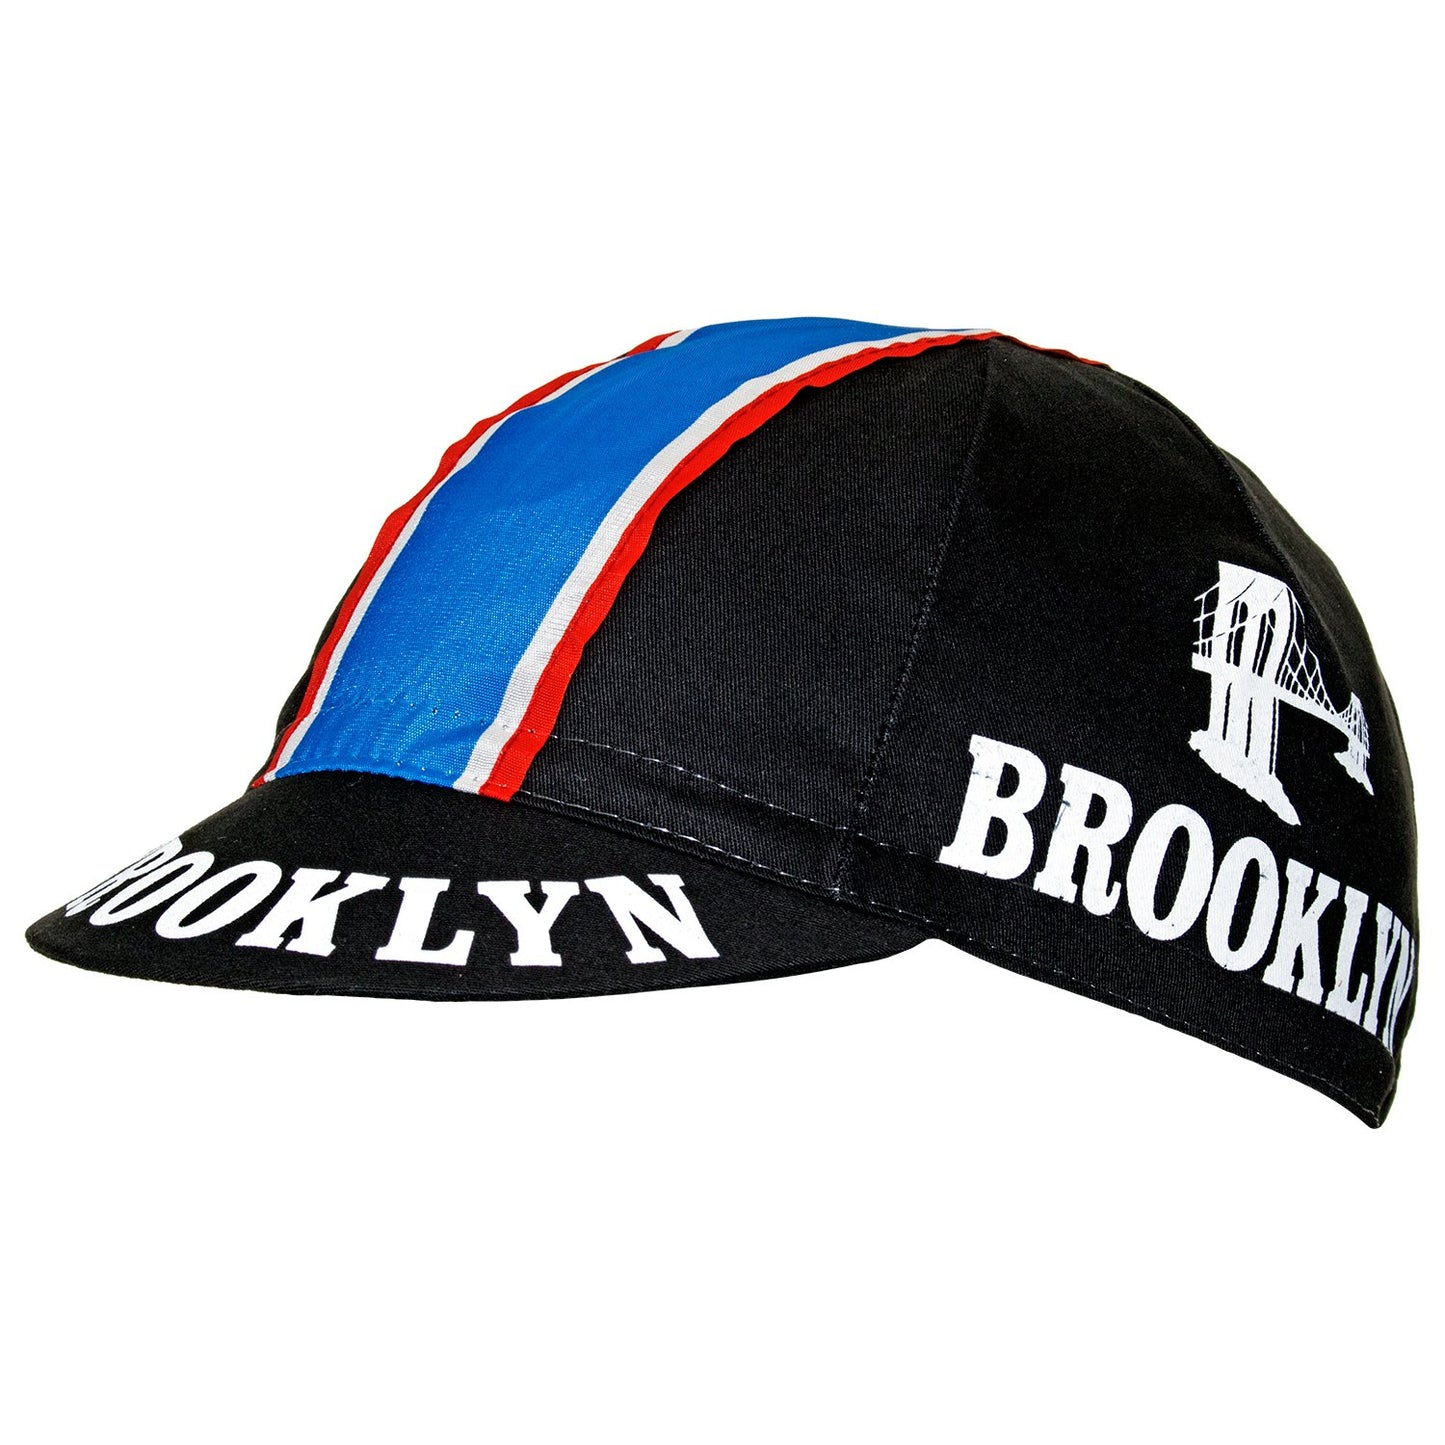 Apis Brooklyn Vintage Cycling Cap - Black